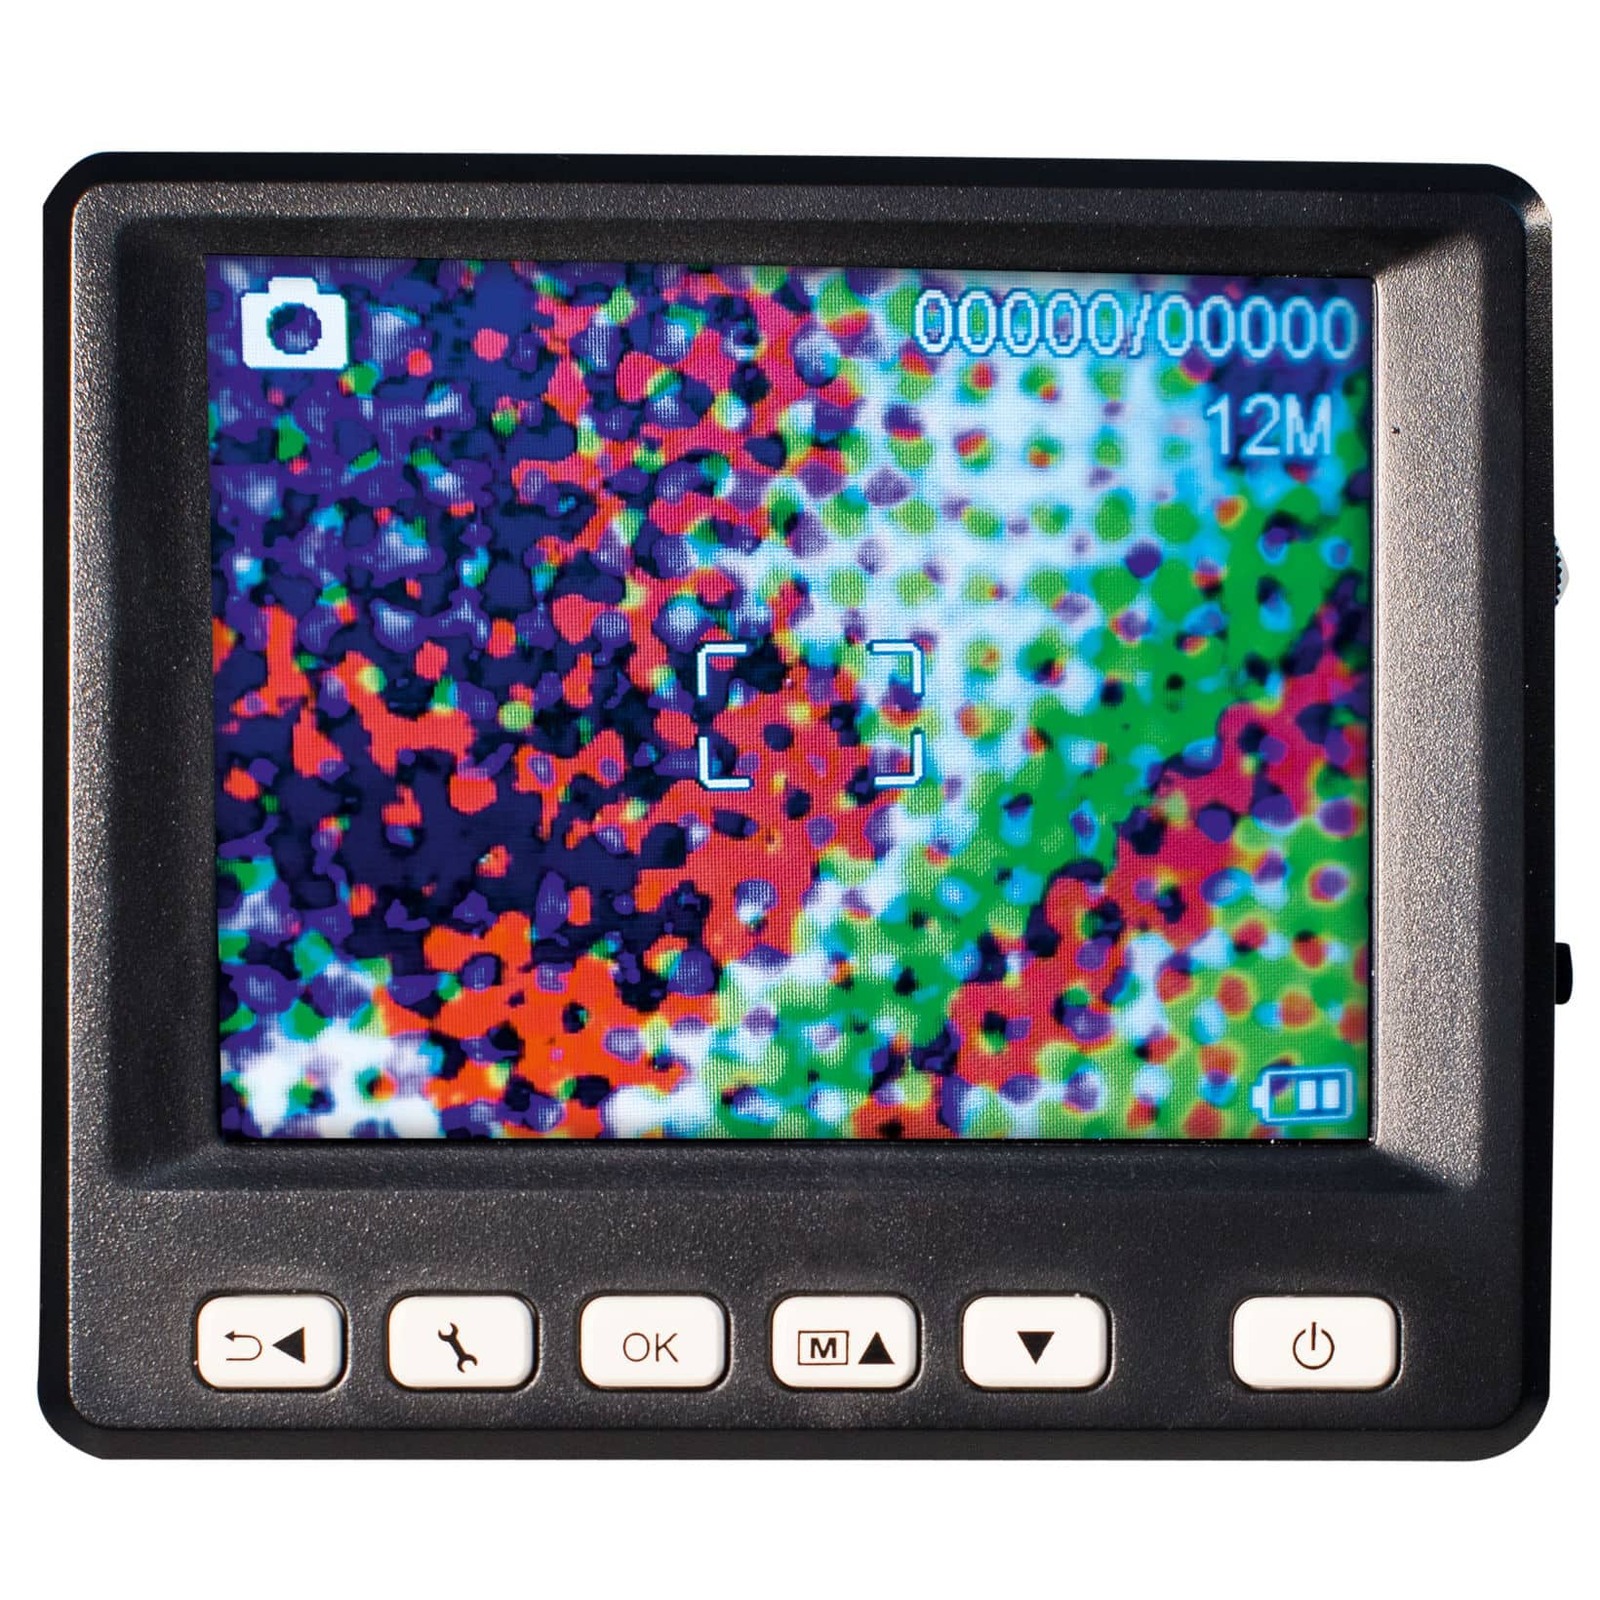 LCD digital microscope with 10-500x